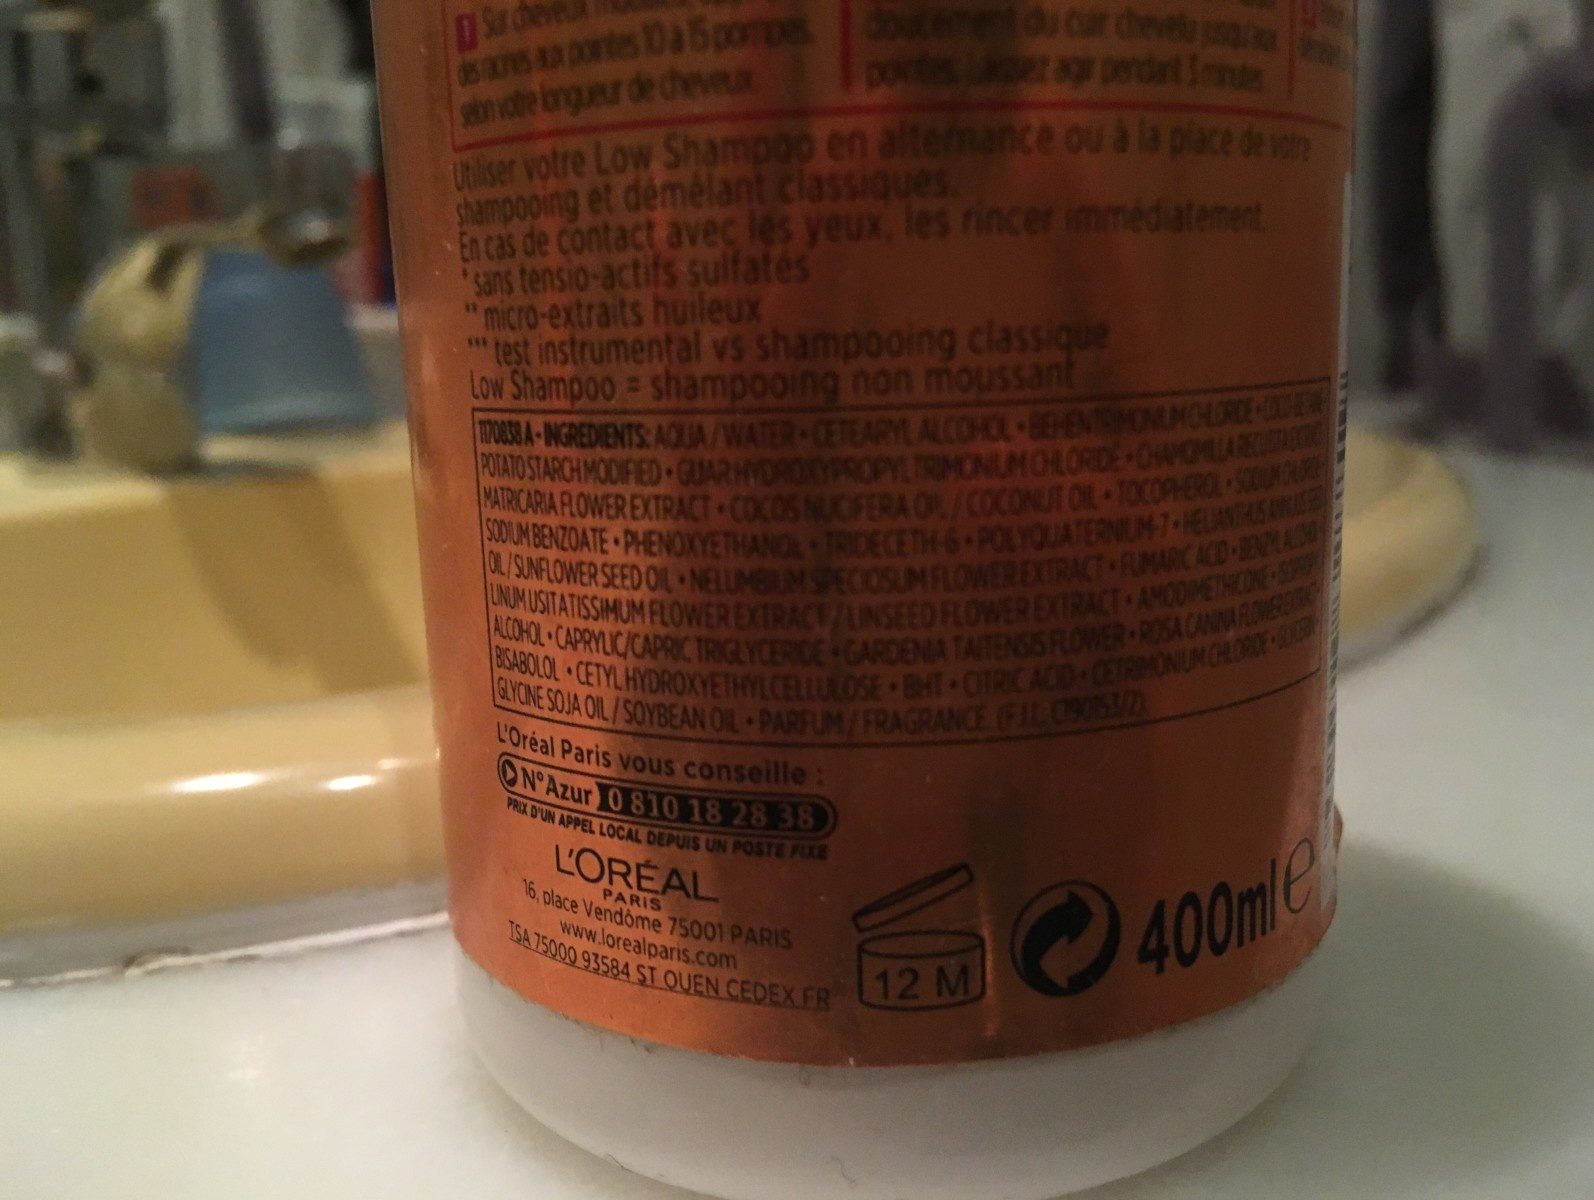 Low shampoo huile extraordinaire - Ingredientes - fr